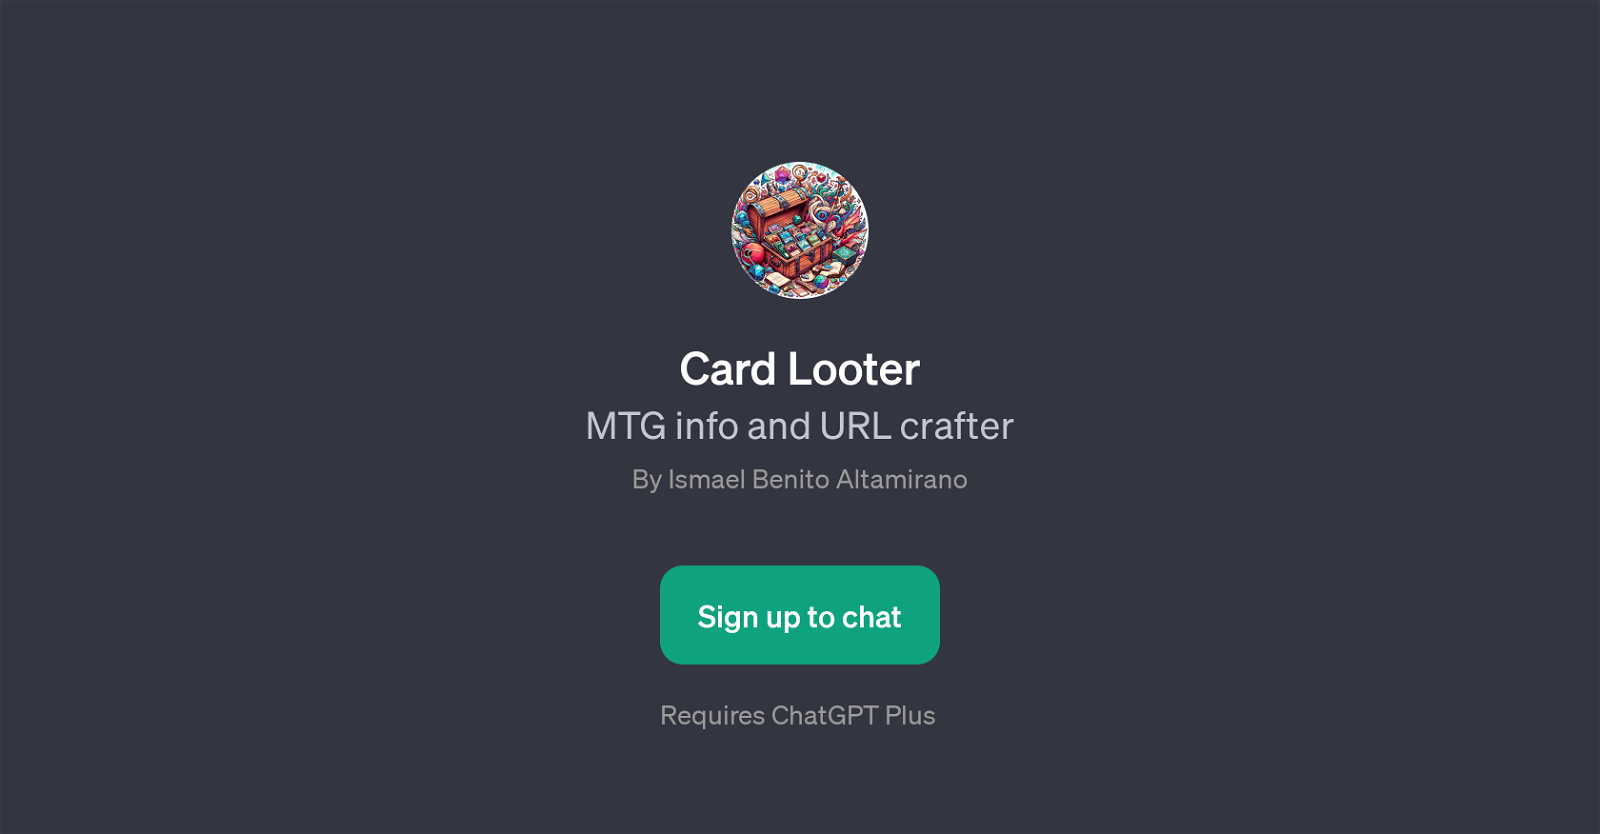 Card Looter website